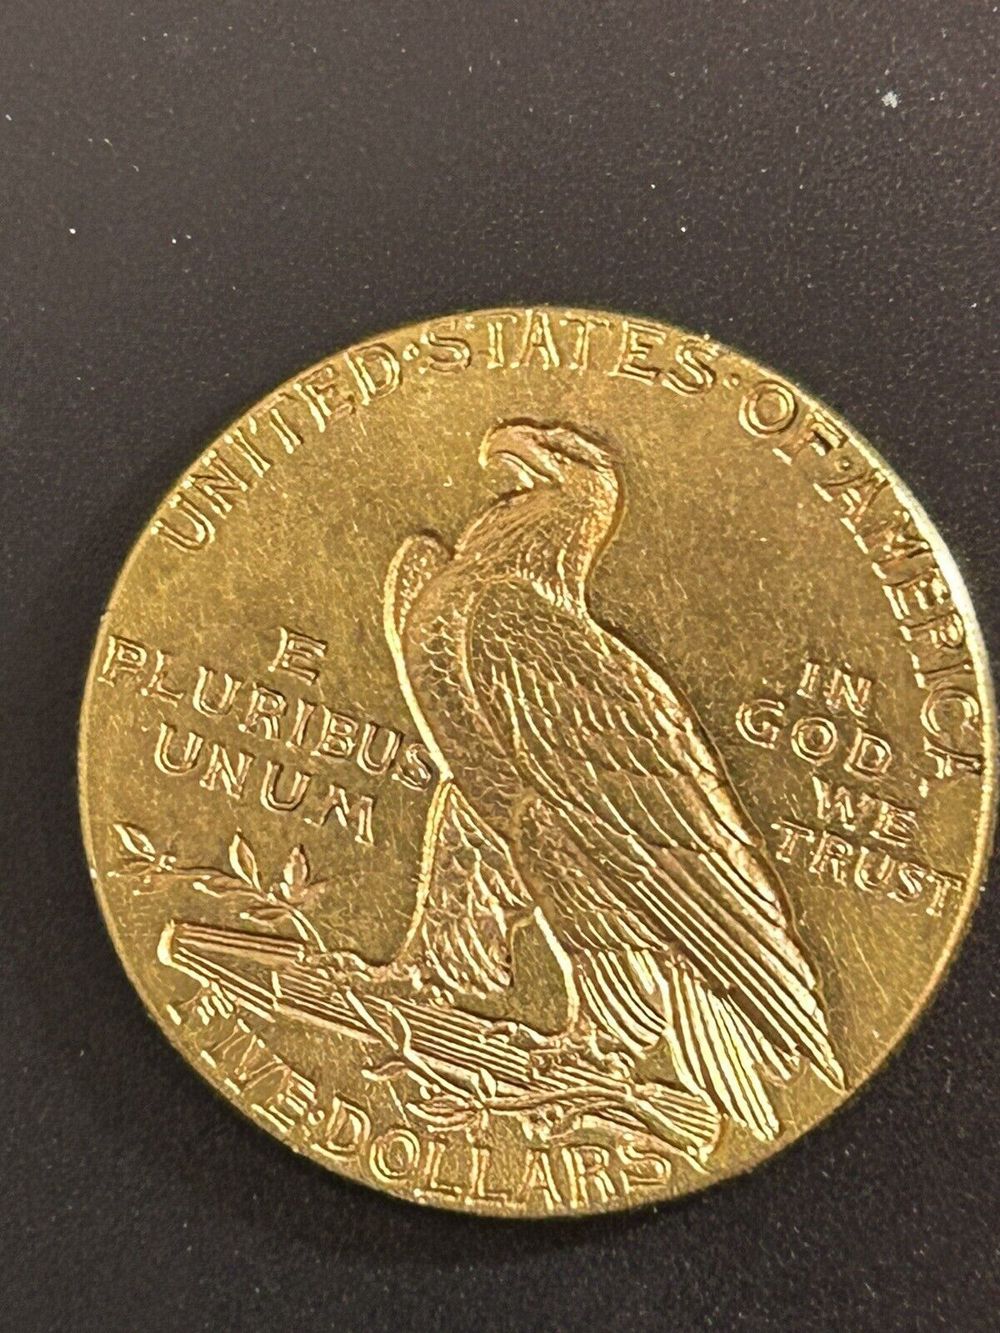  5 US Dollar Indian Head Gold Colin 1912